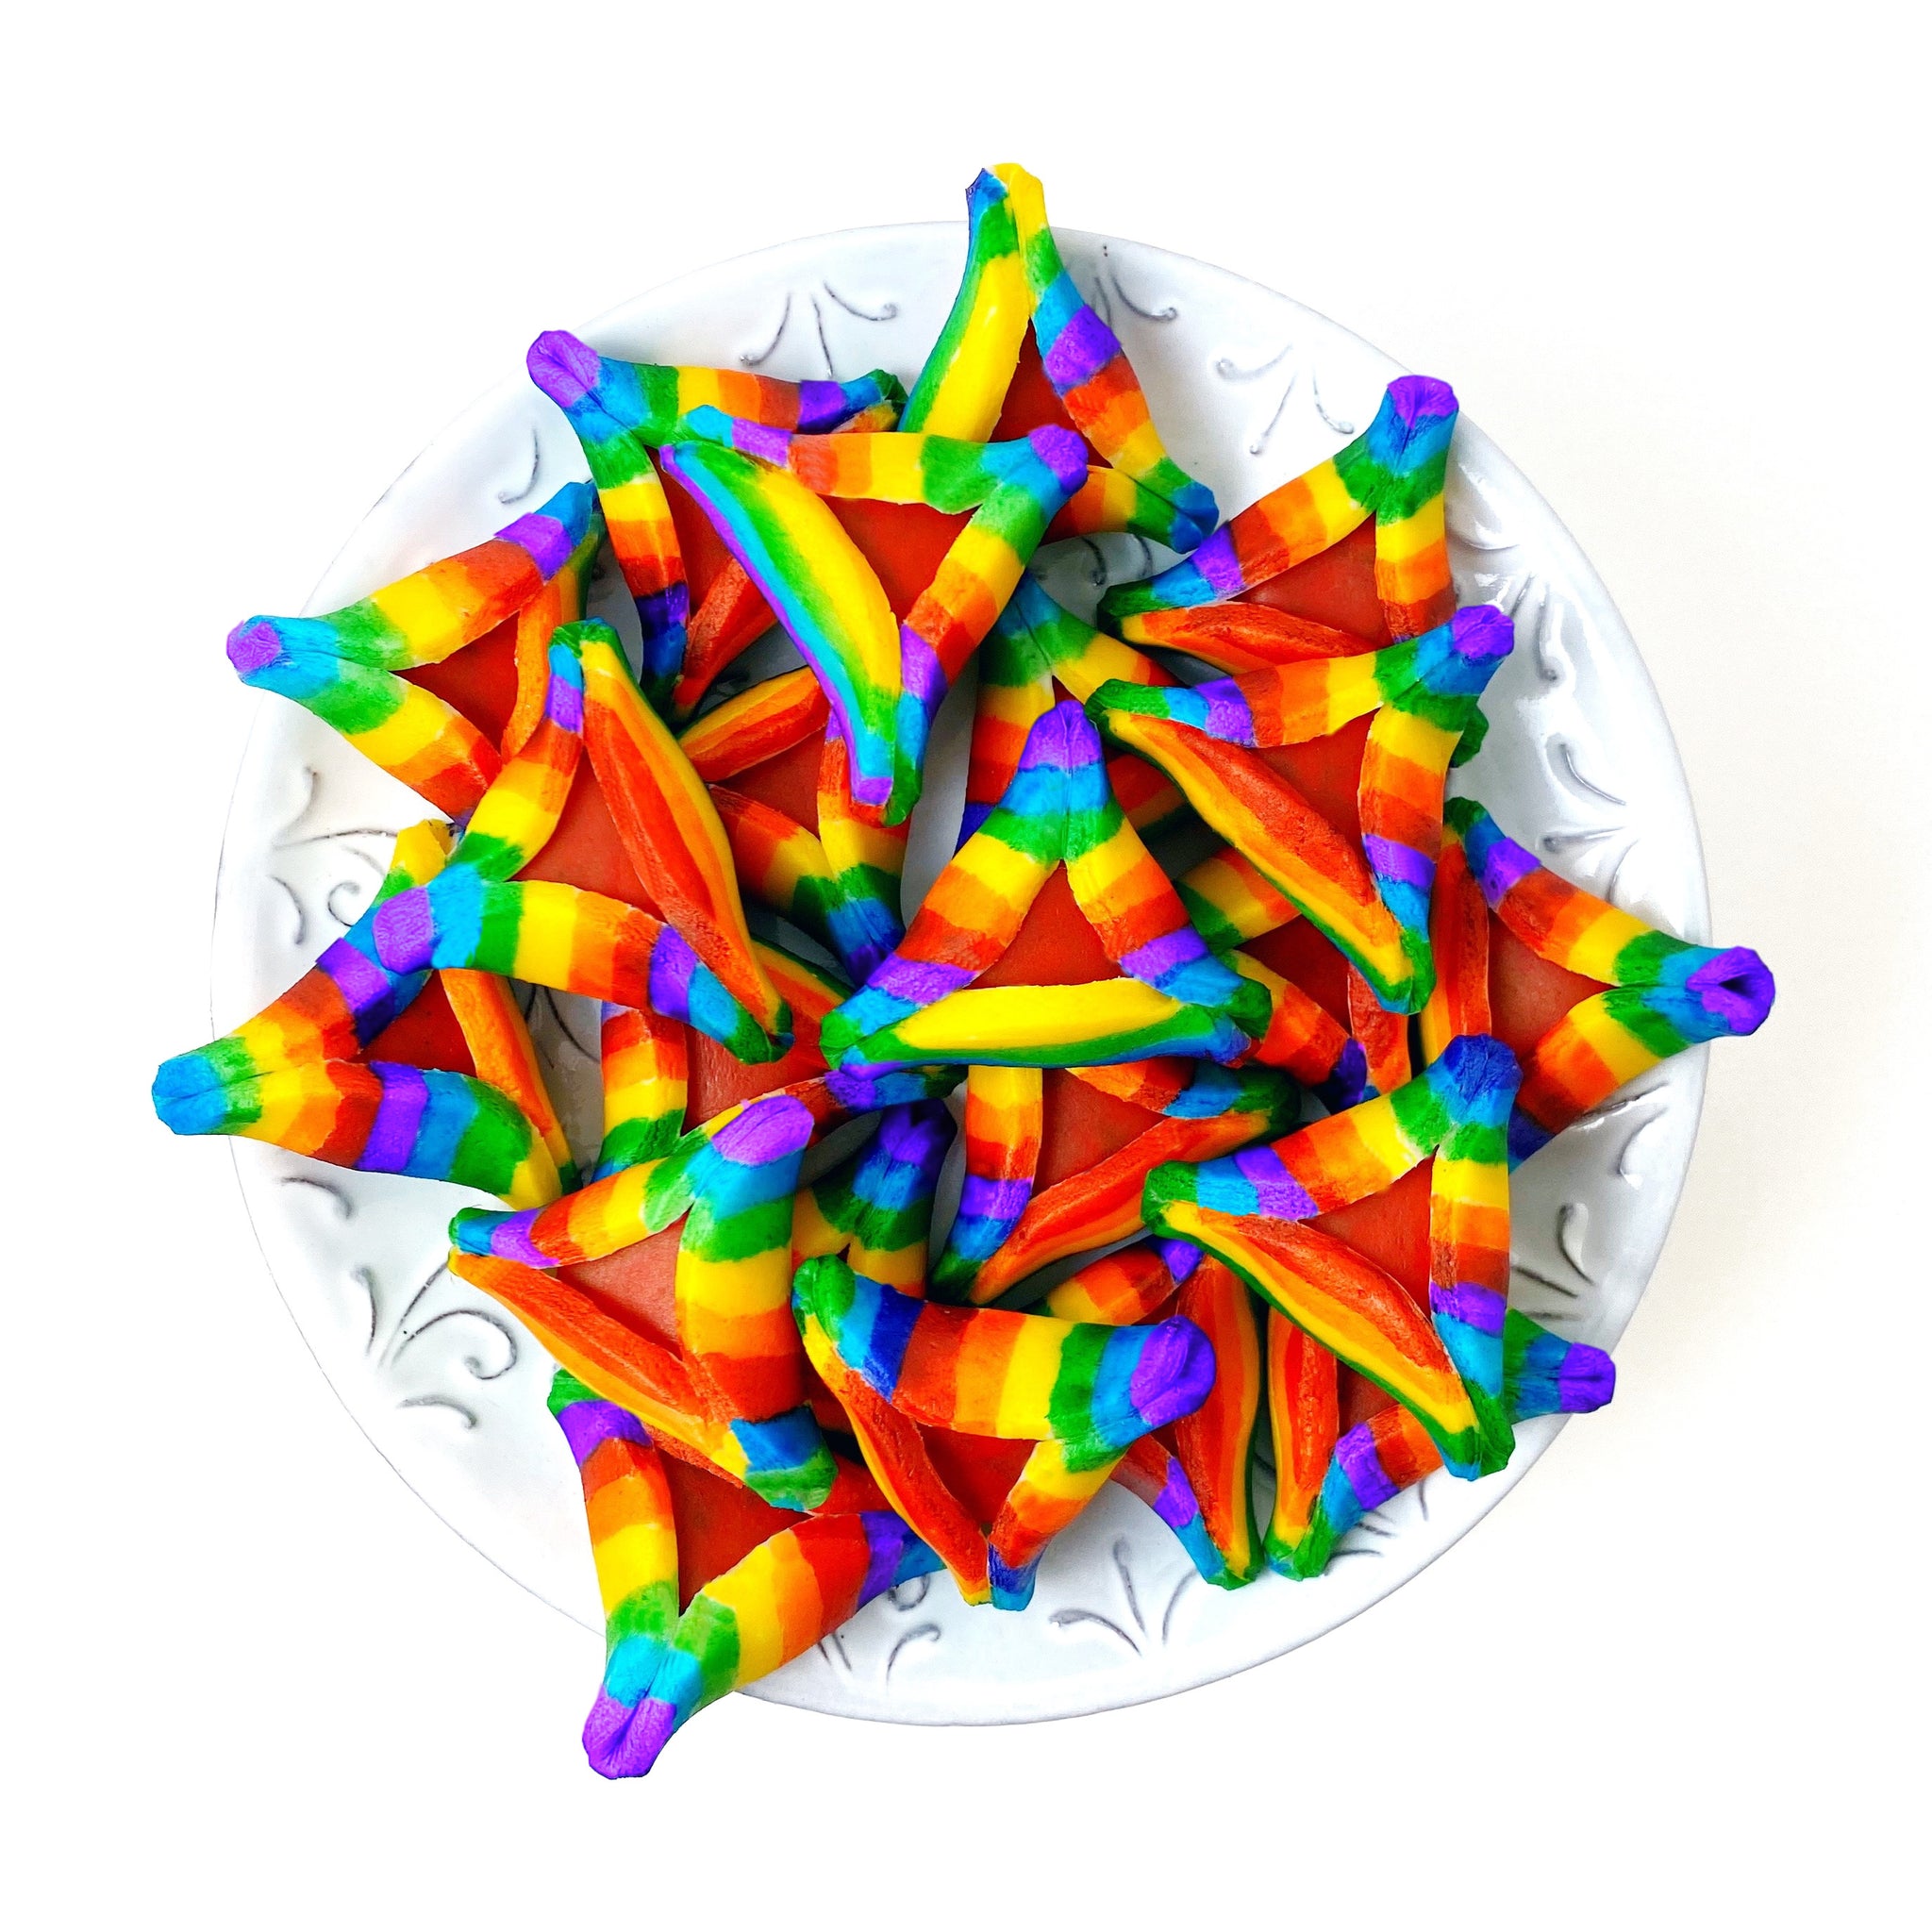 Purim vegan gluten-free rainbow purim hamantaschen marzipan candy sculpture treats pile